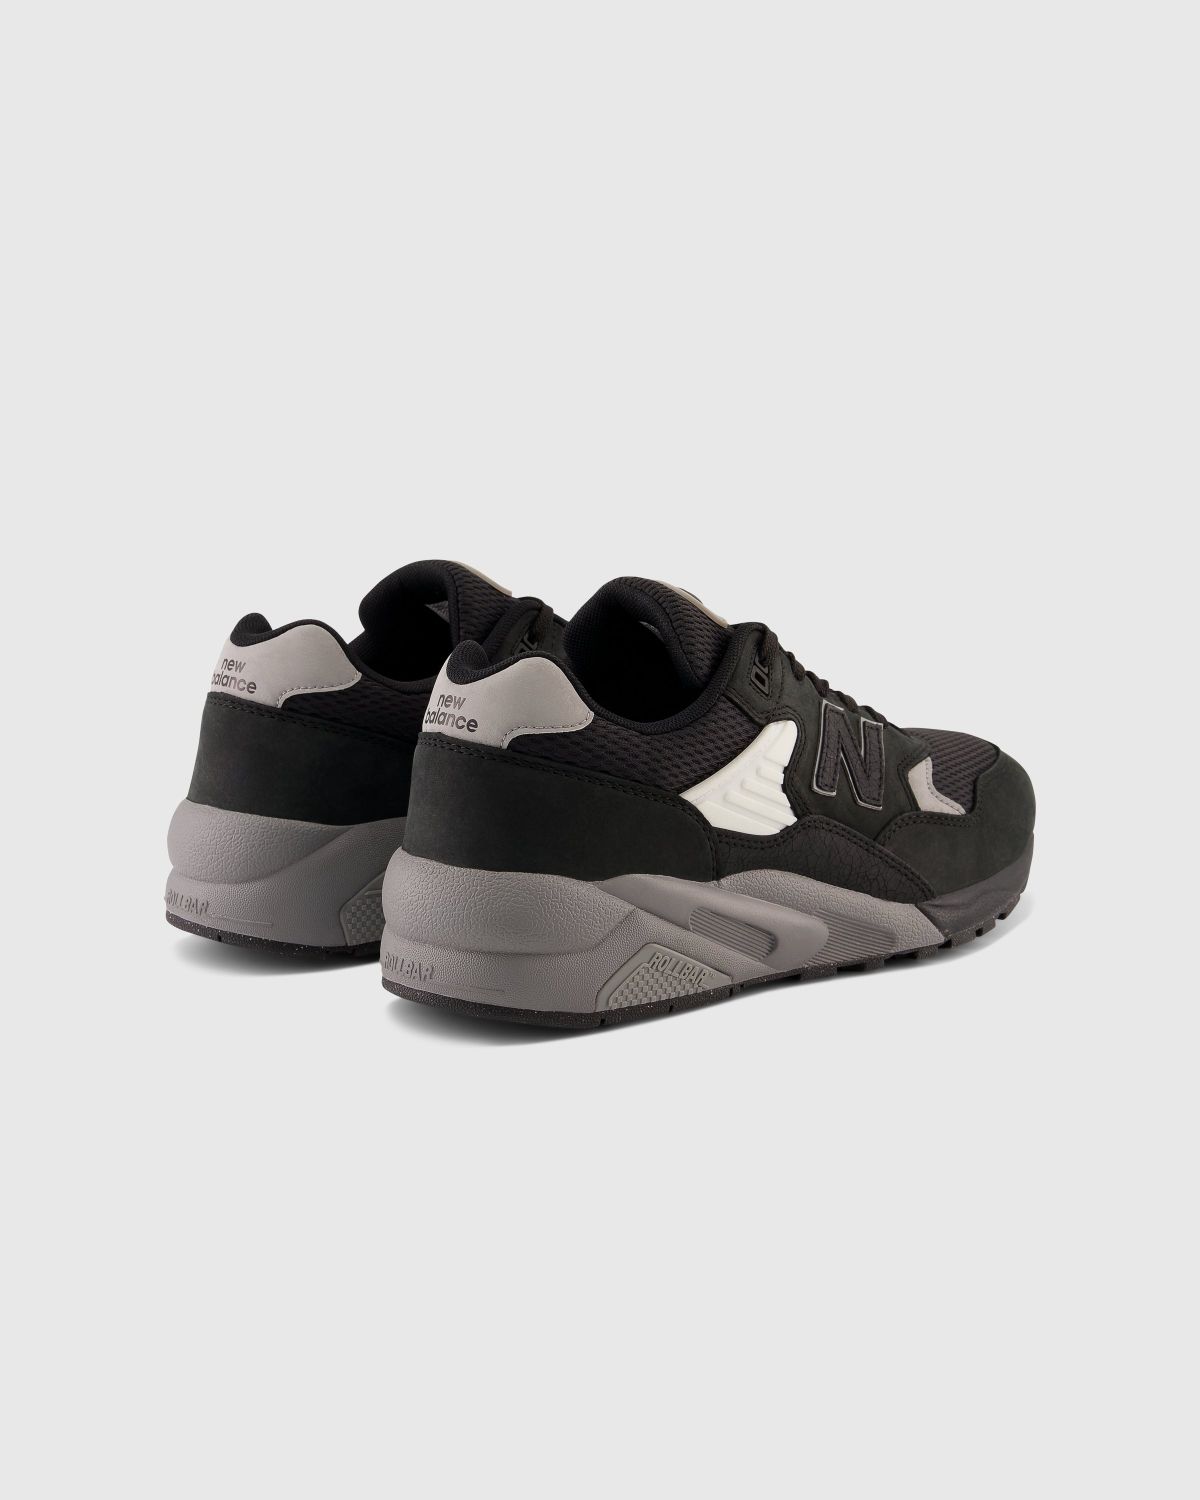 New Balance – MT 580 MDB Black - Sneakers - Black - Image 4